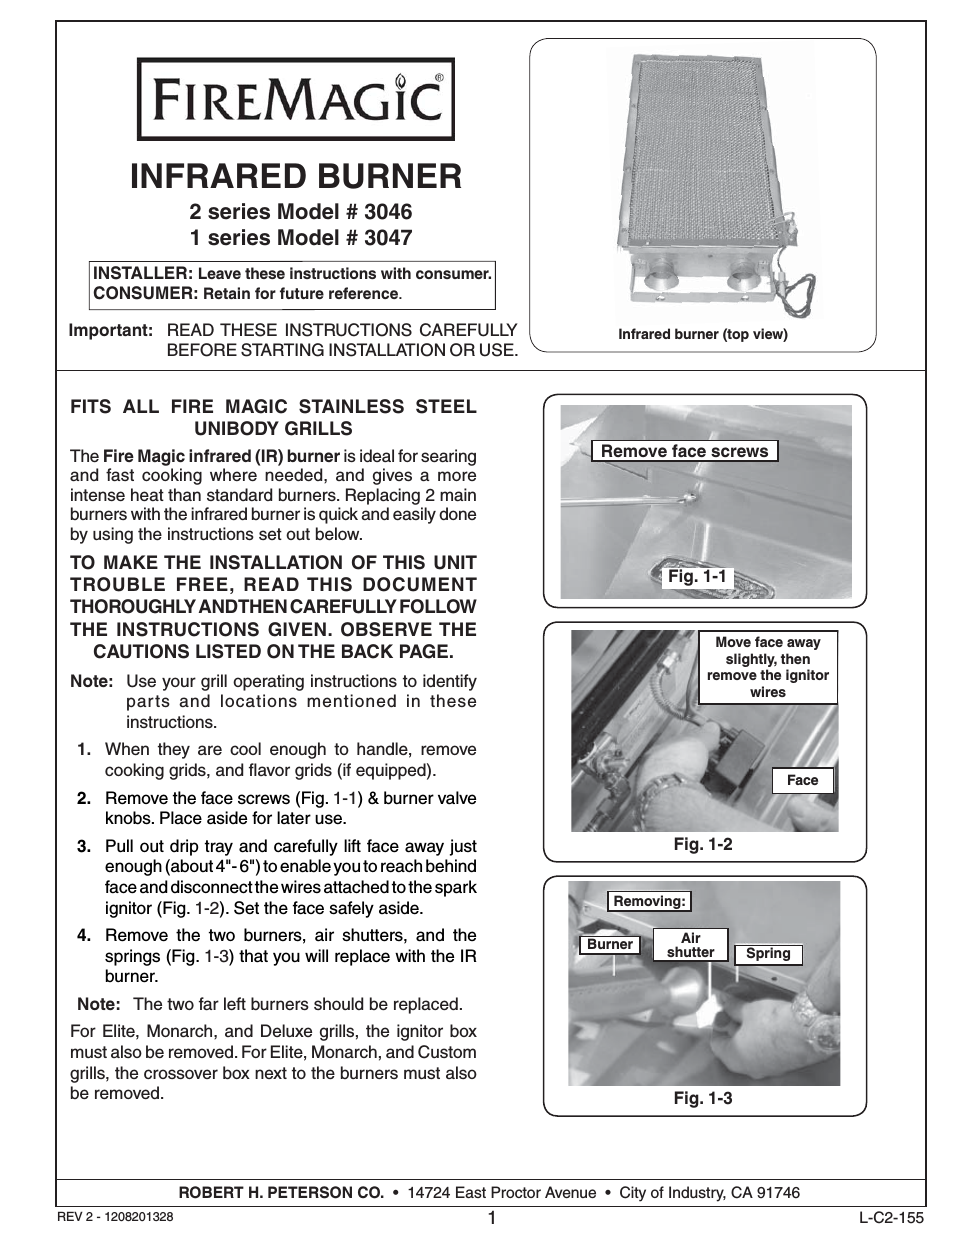 3046 Infrared Burner